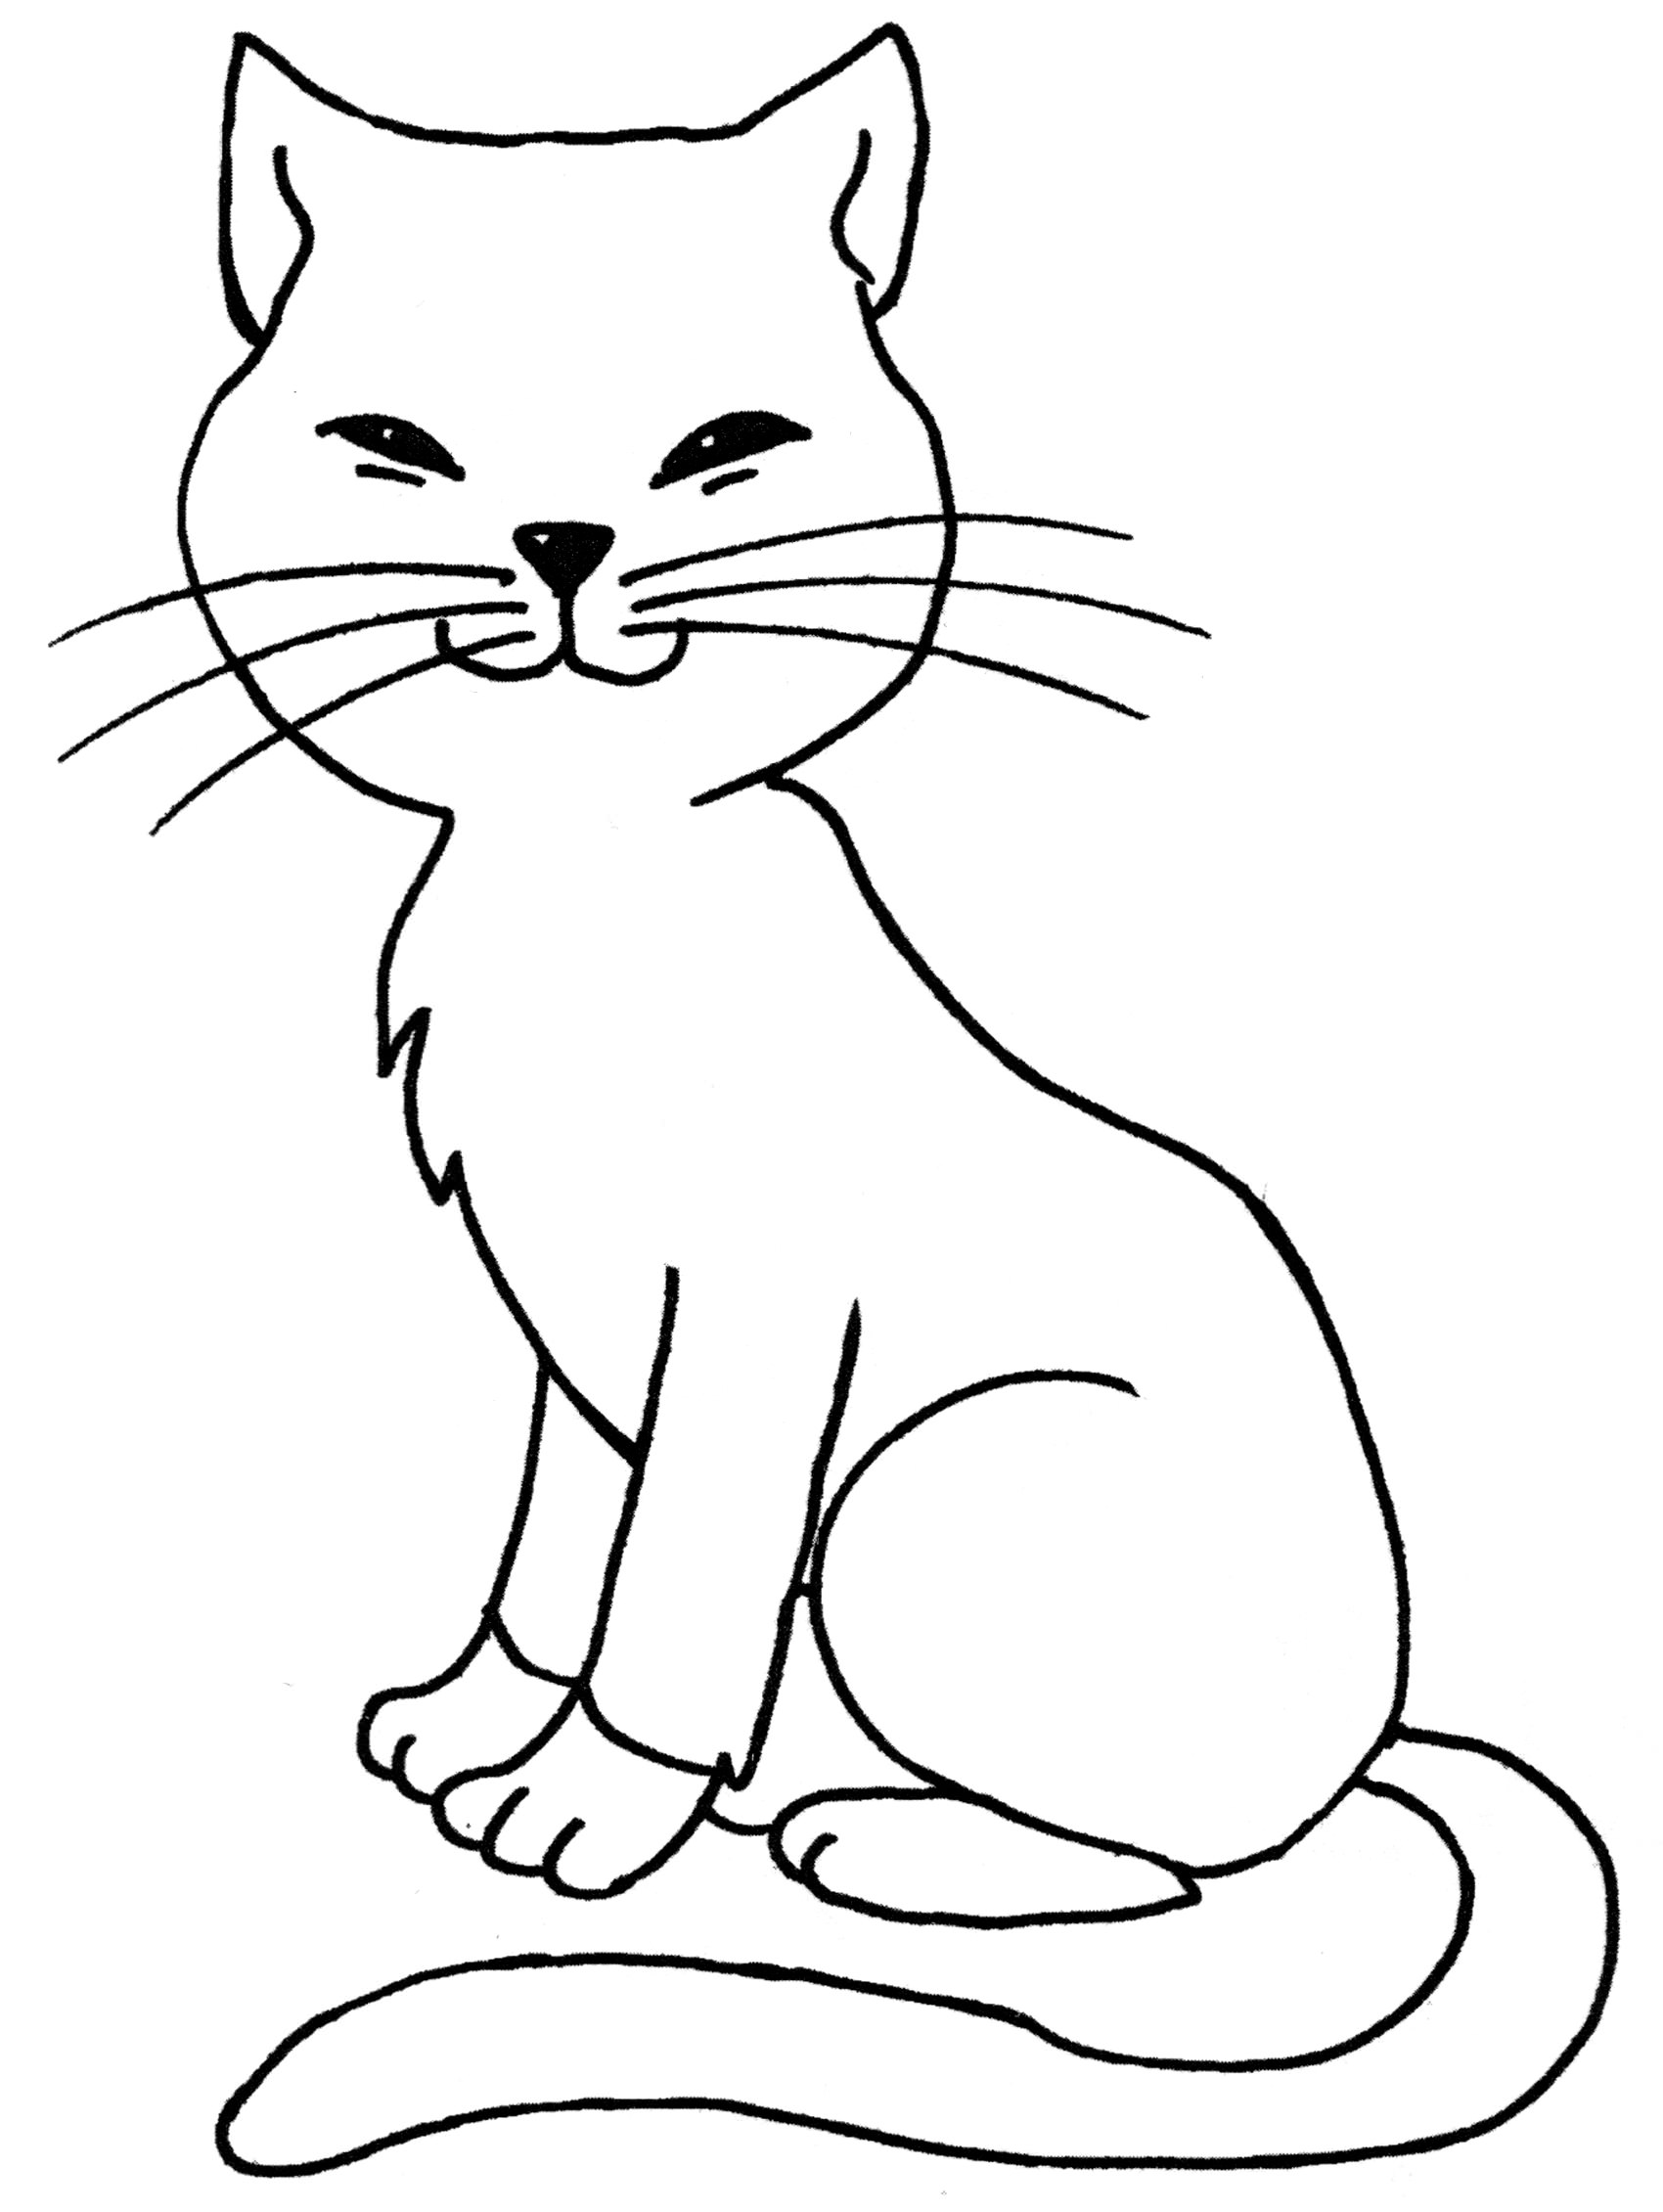 Розмальовка Вусата кішка